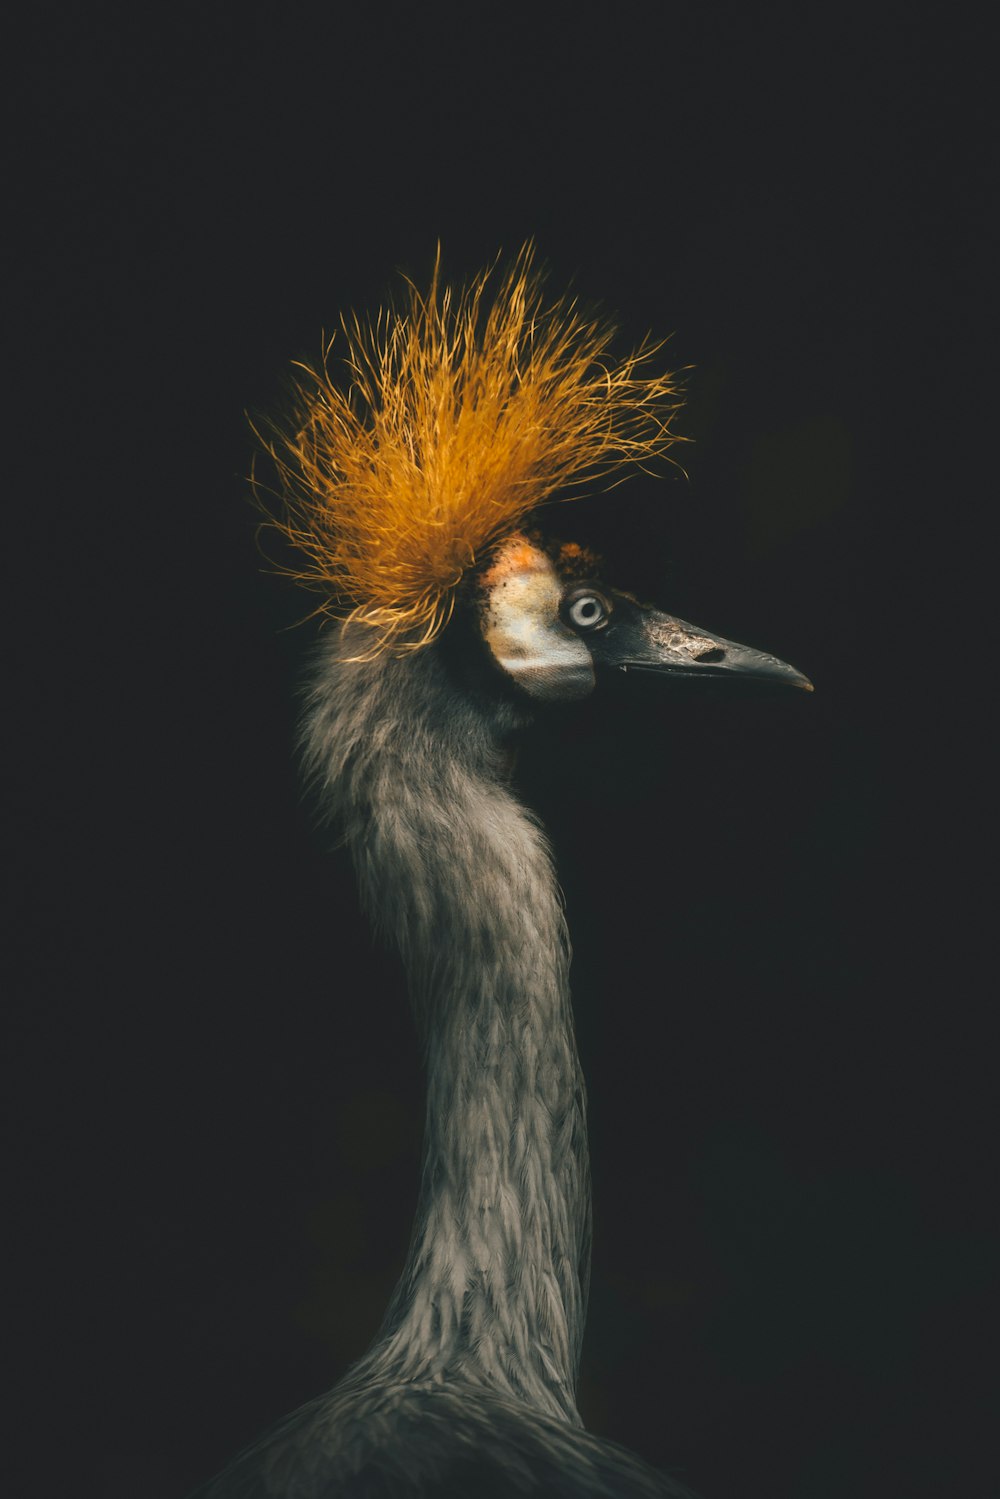 Un uccello con un mohawk giallo sulla testa